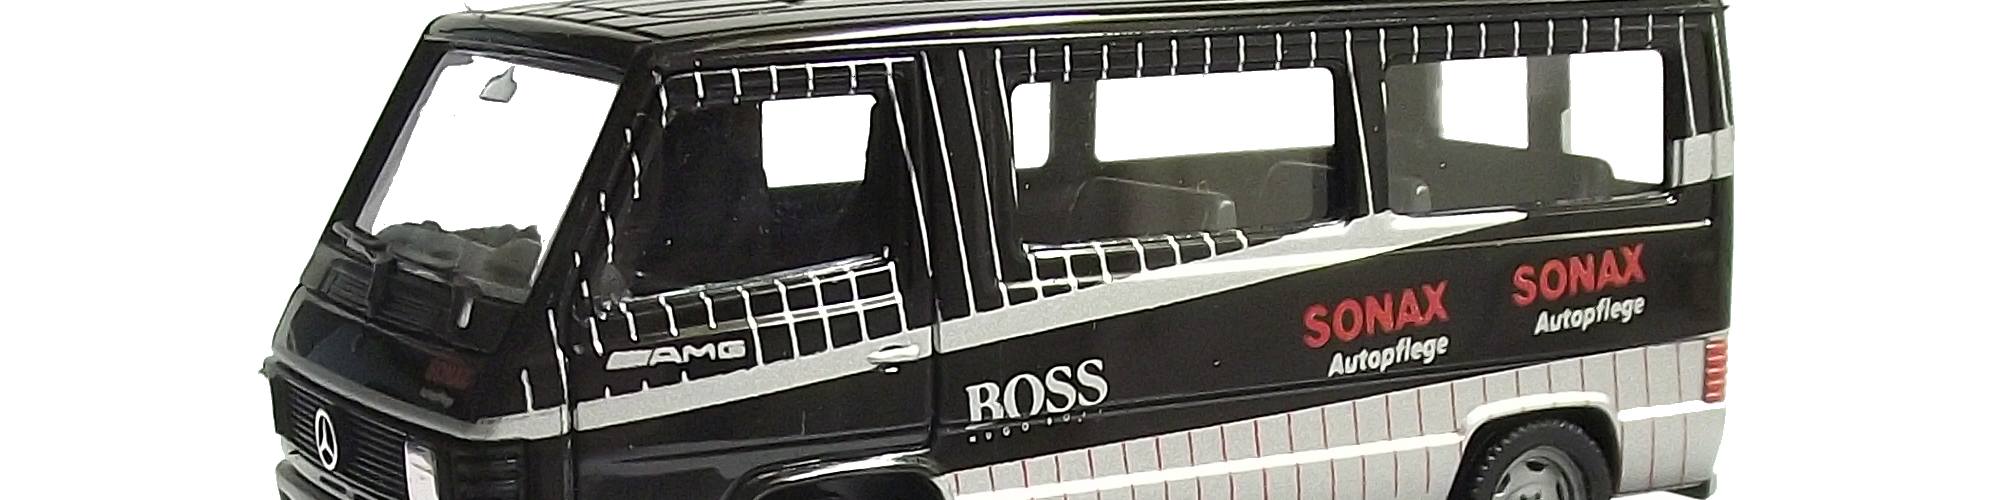 Herpa – Mercedes Benz MB100 – Boss-Sonax